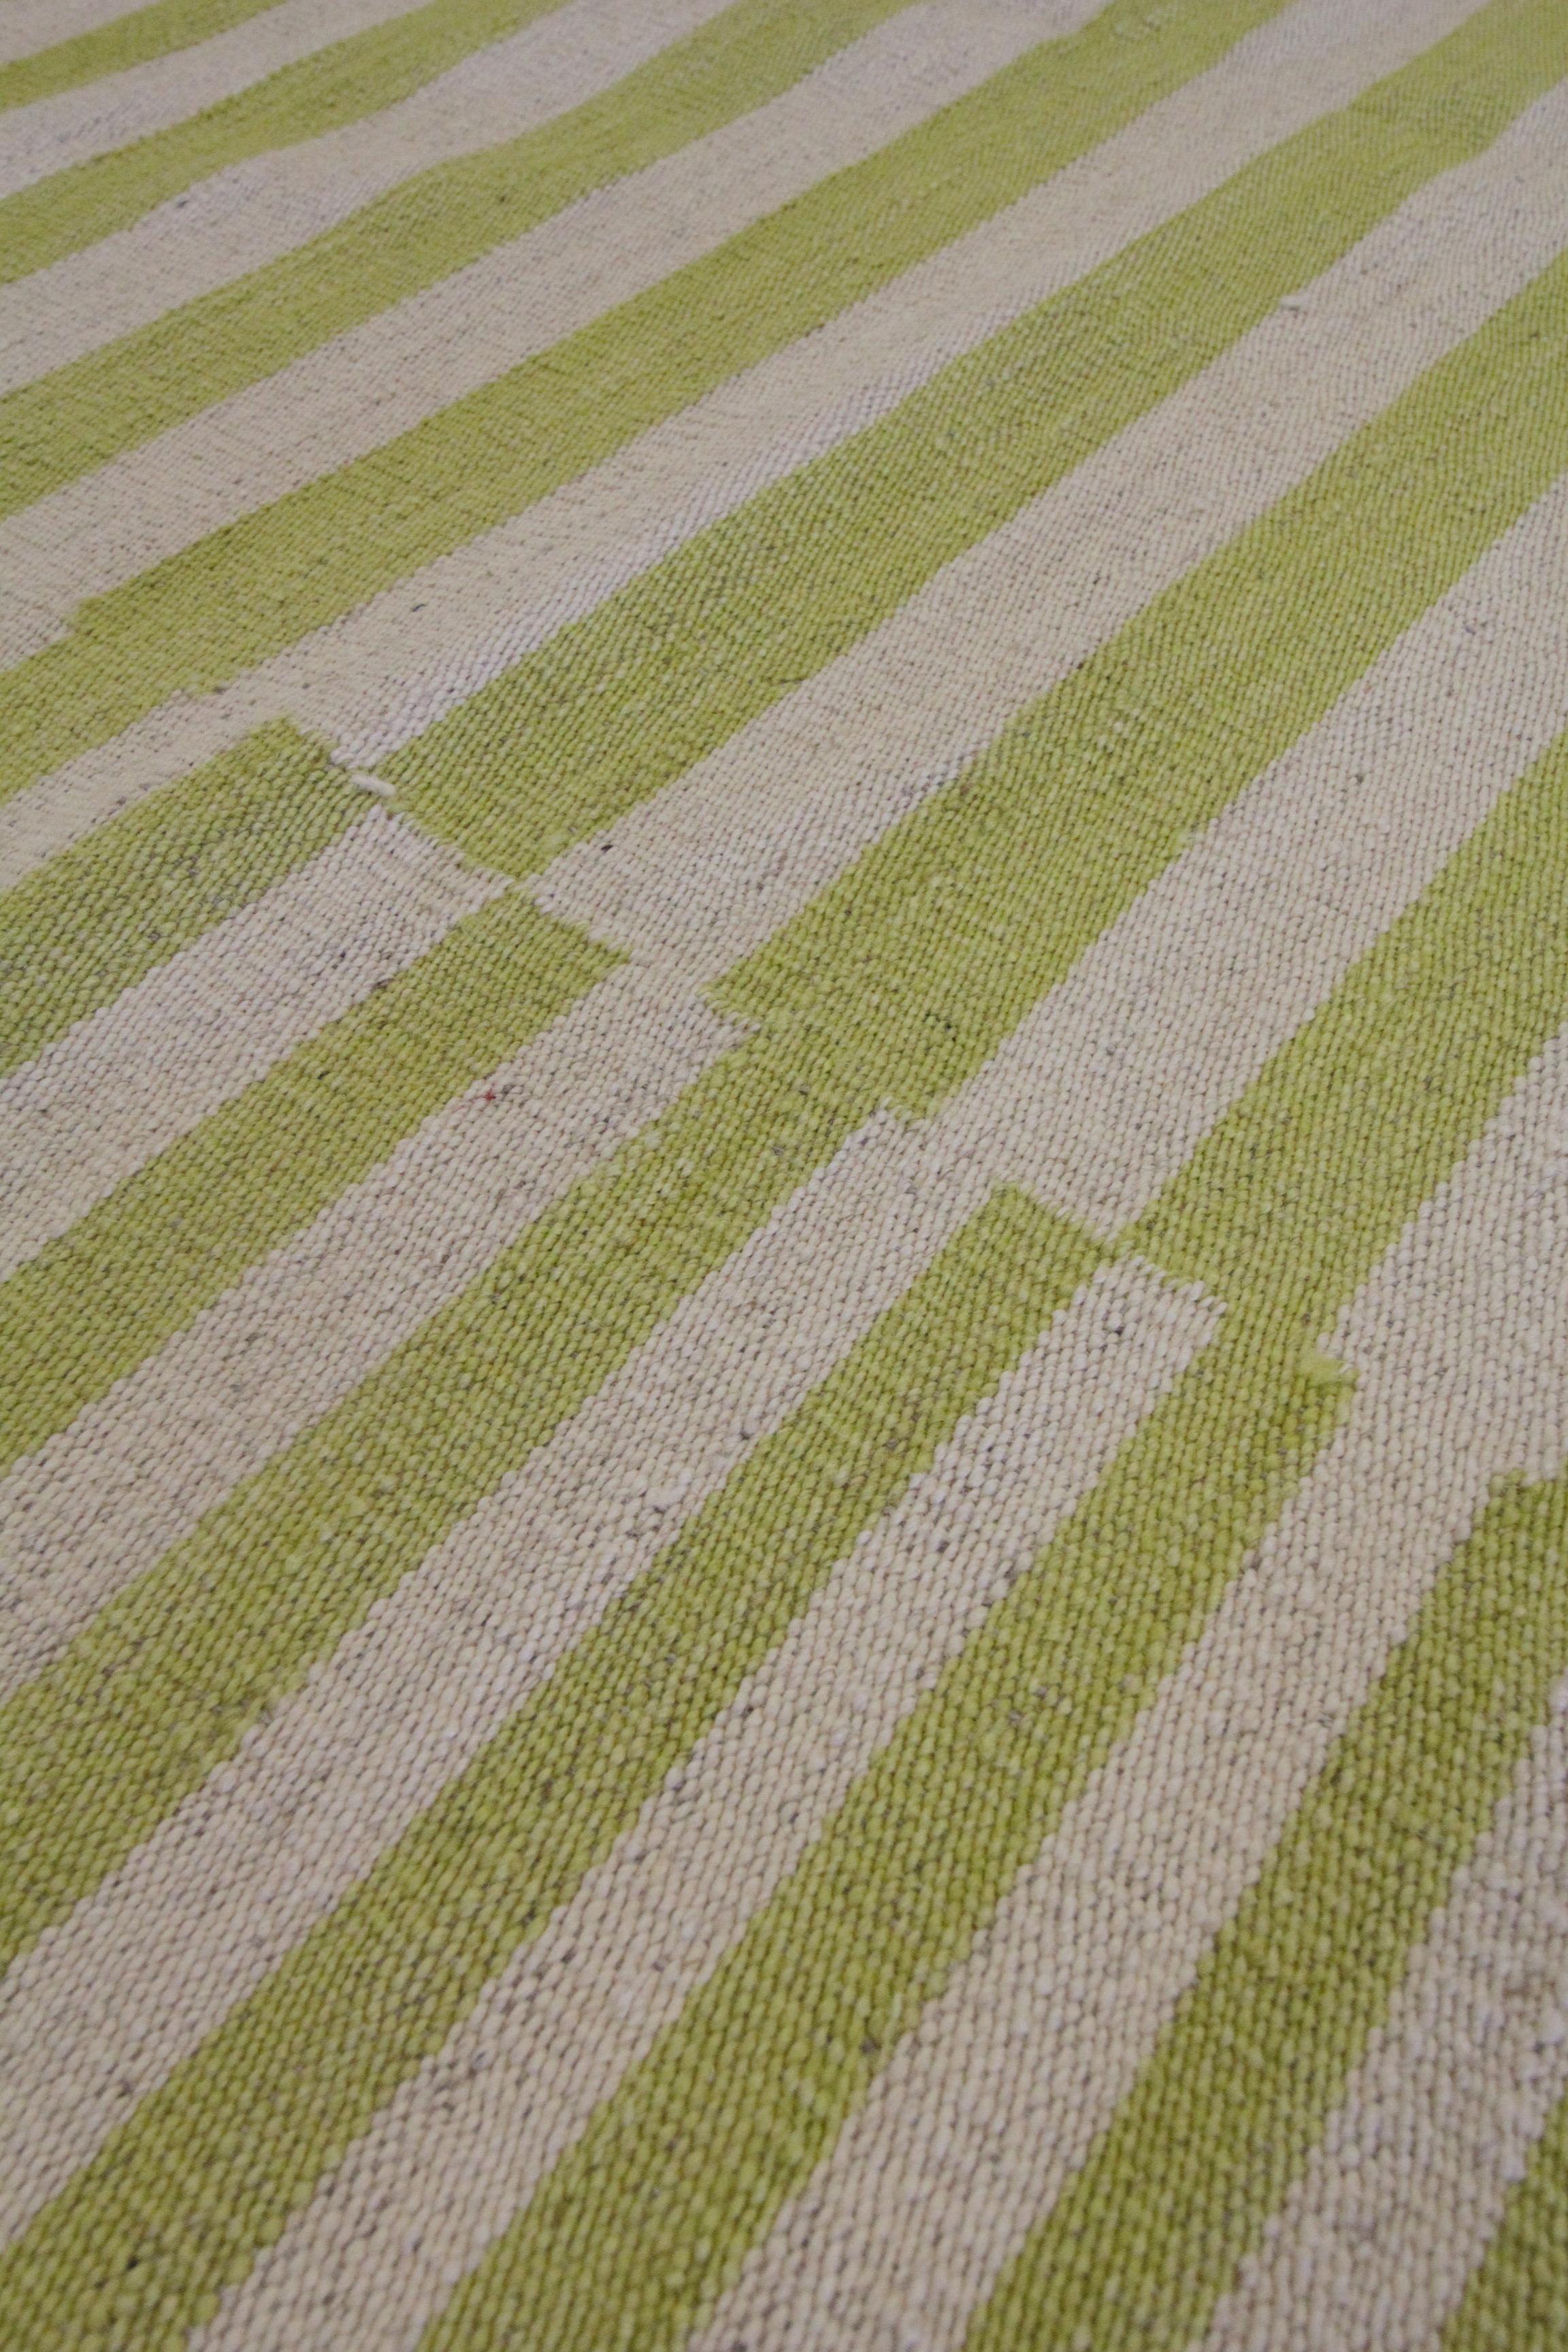 Afghan Modern Striped Kilim Rug Handmade Kelim Carpet Mustard Yellow Wool Area Rug For Sale